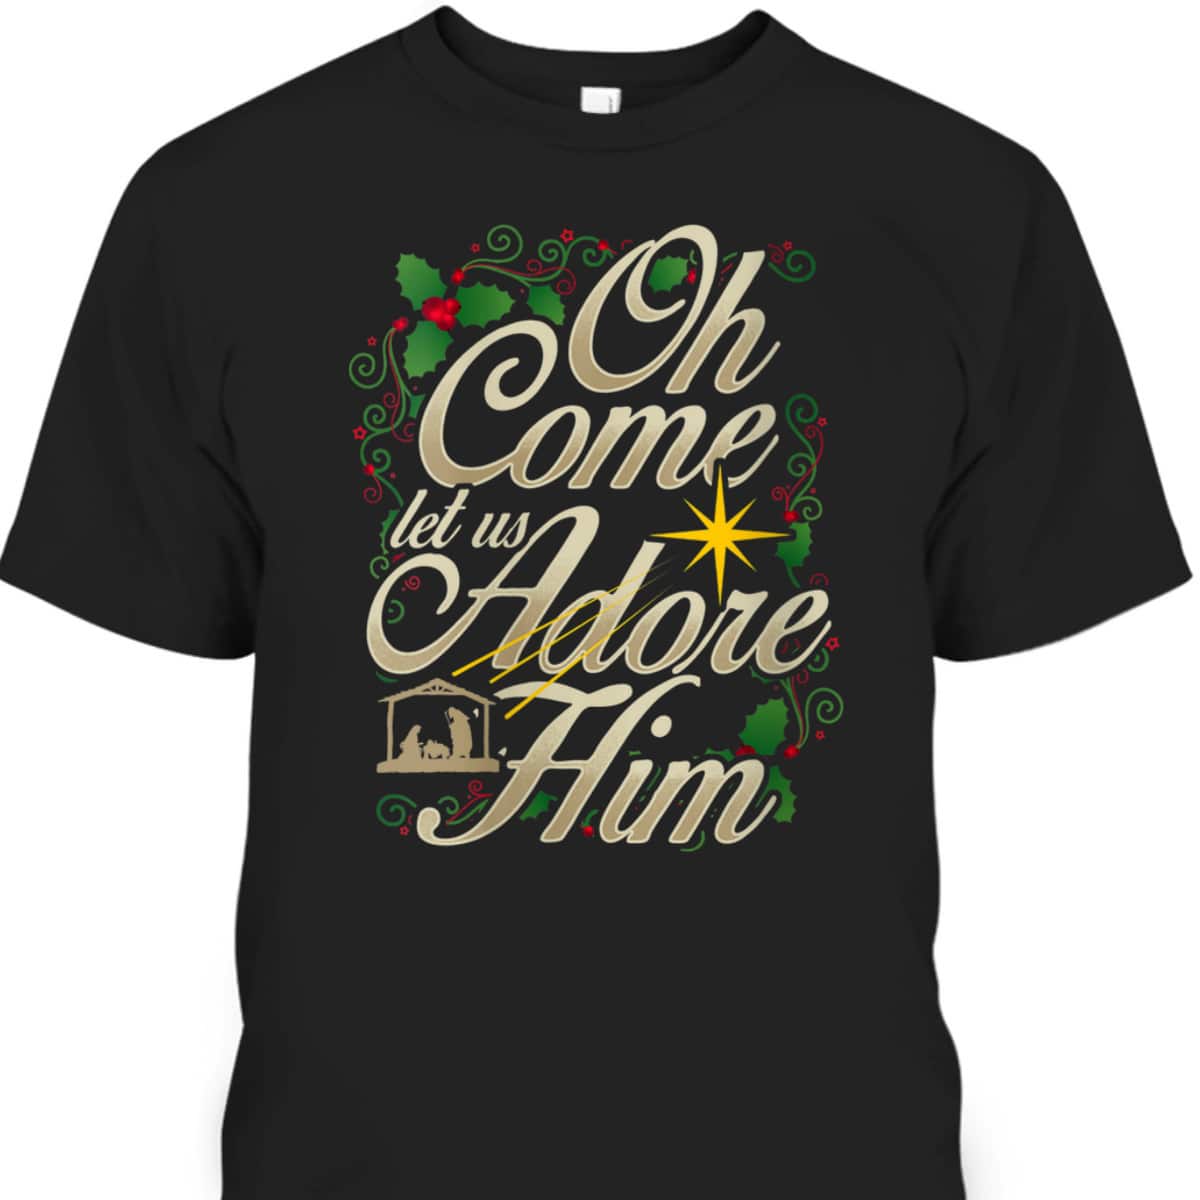 Oh Come Let Us Adore Him Nativity Christmas Religious Jesus T-Shirt